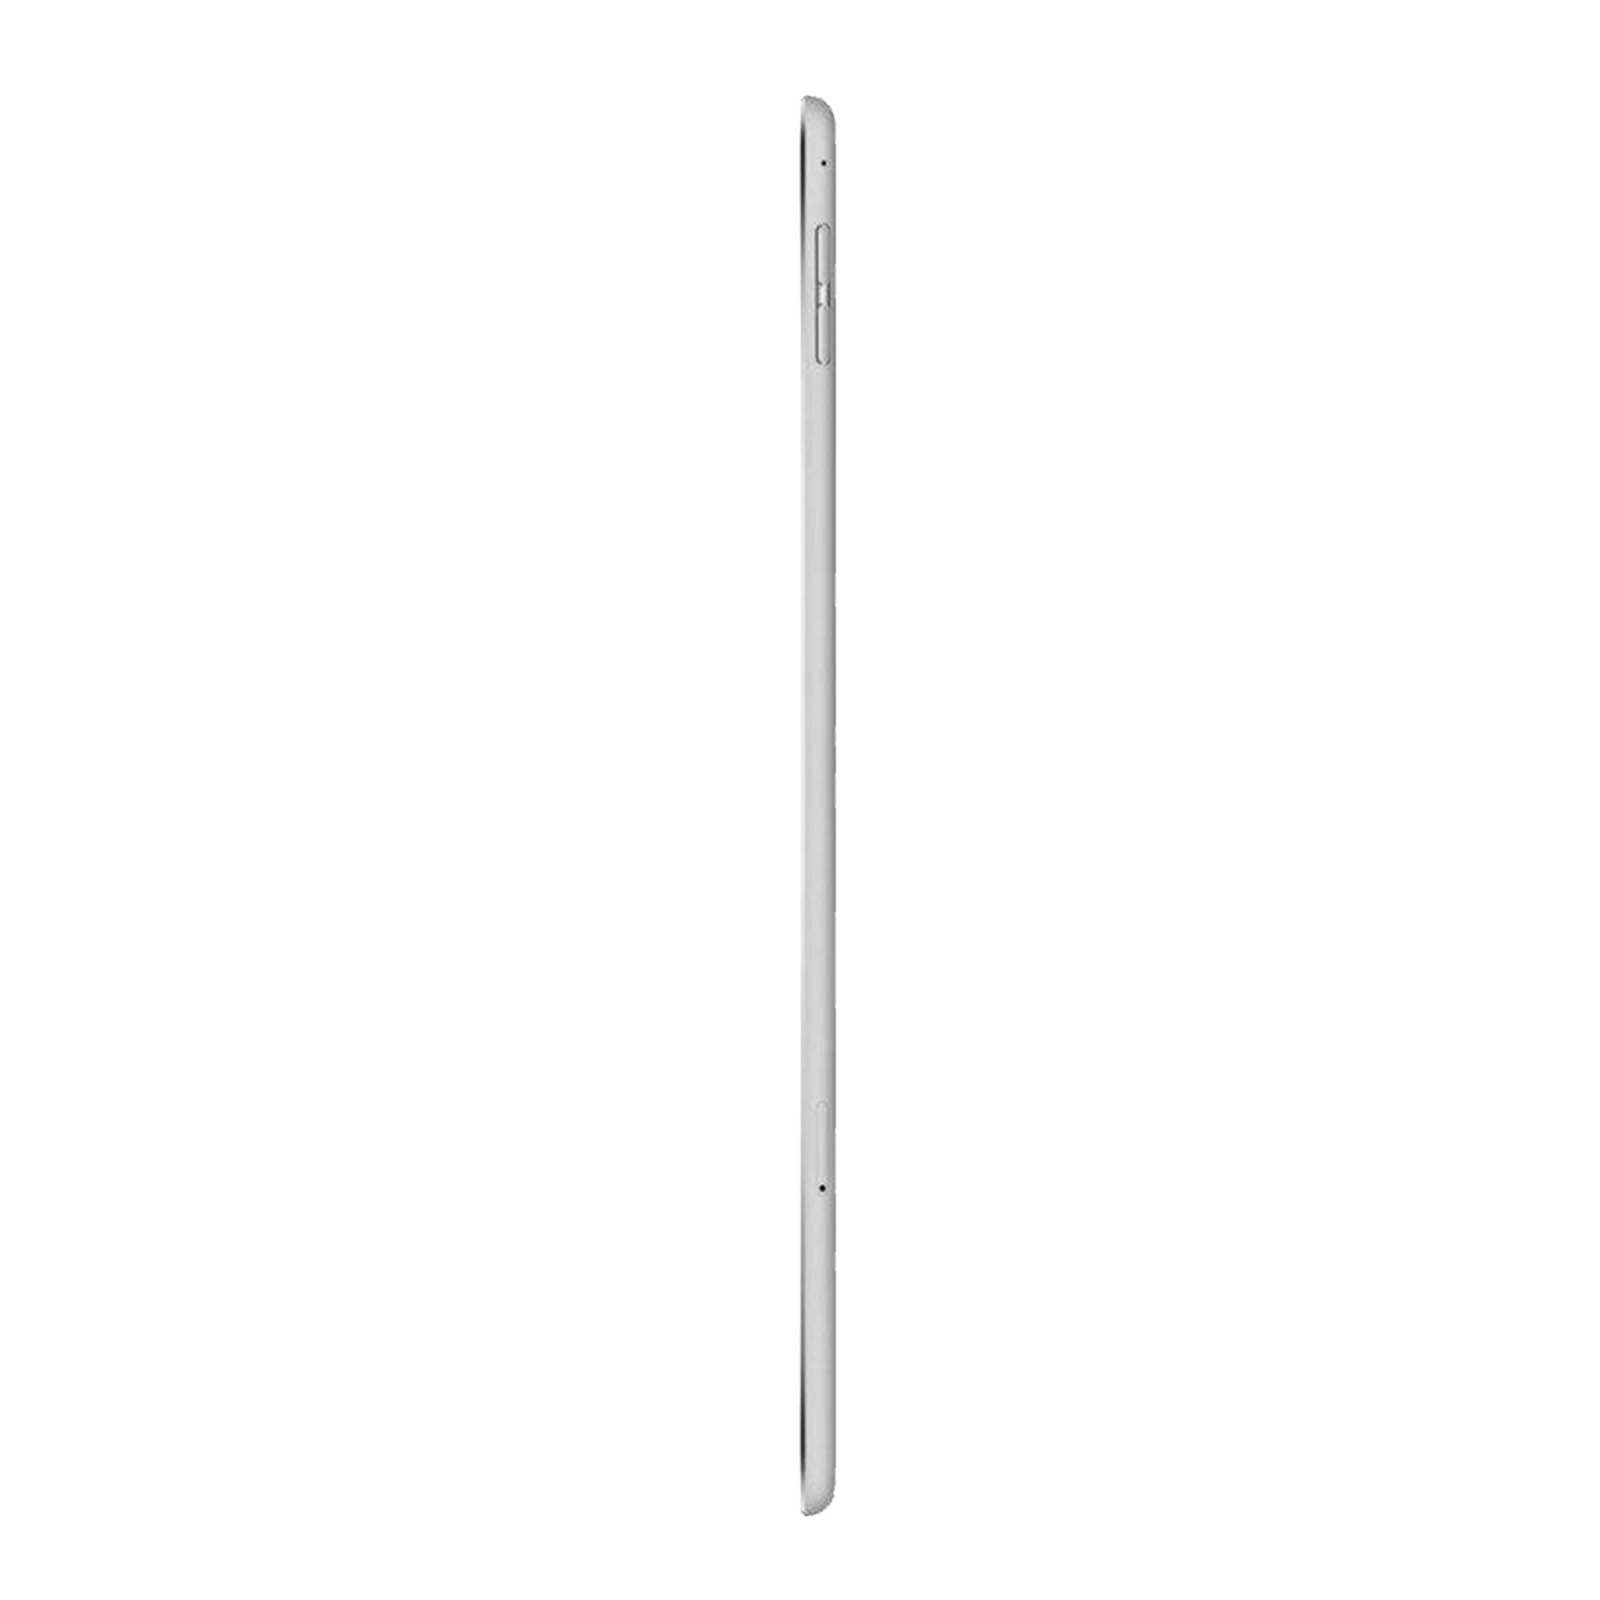 Apple iPad Air 2 128GB Silver Good Cellular - Unlocked